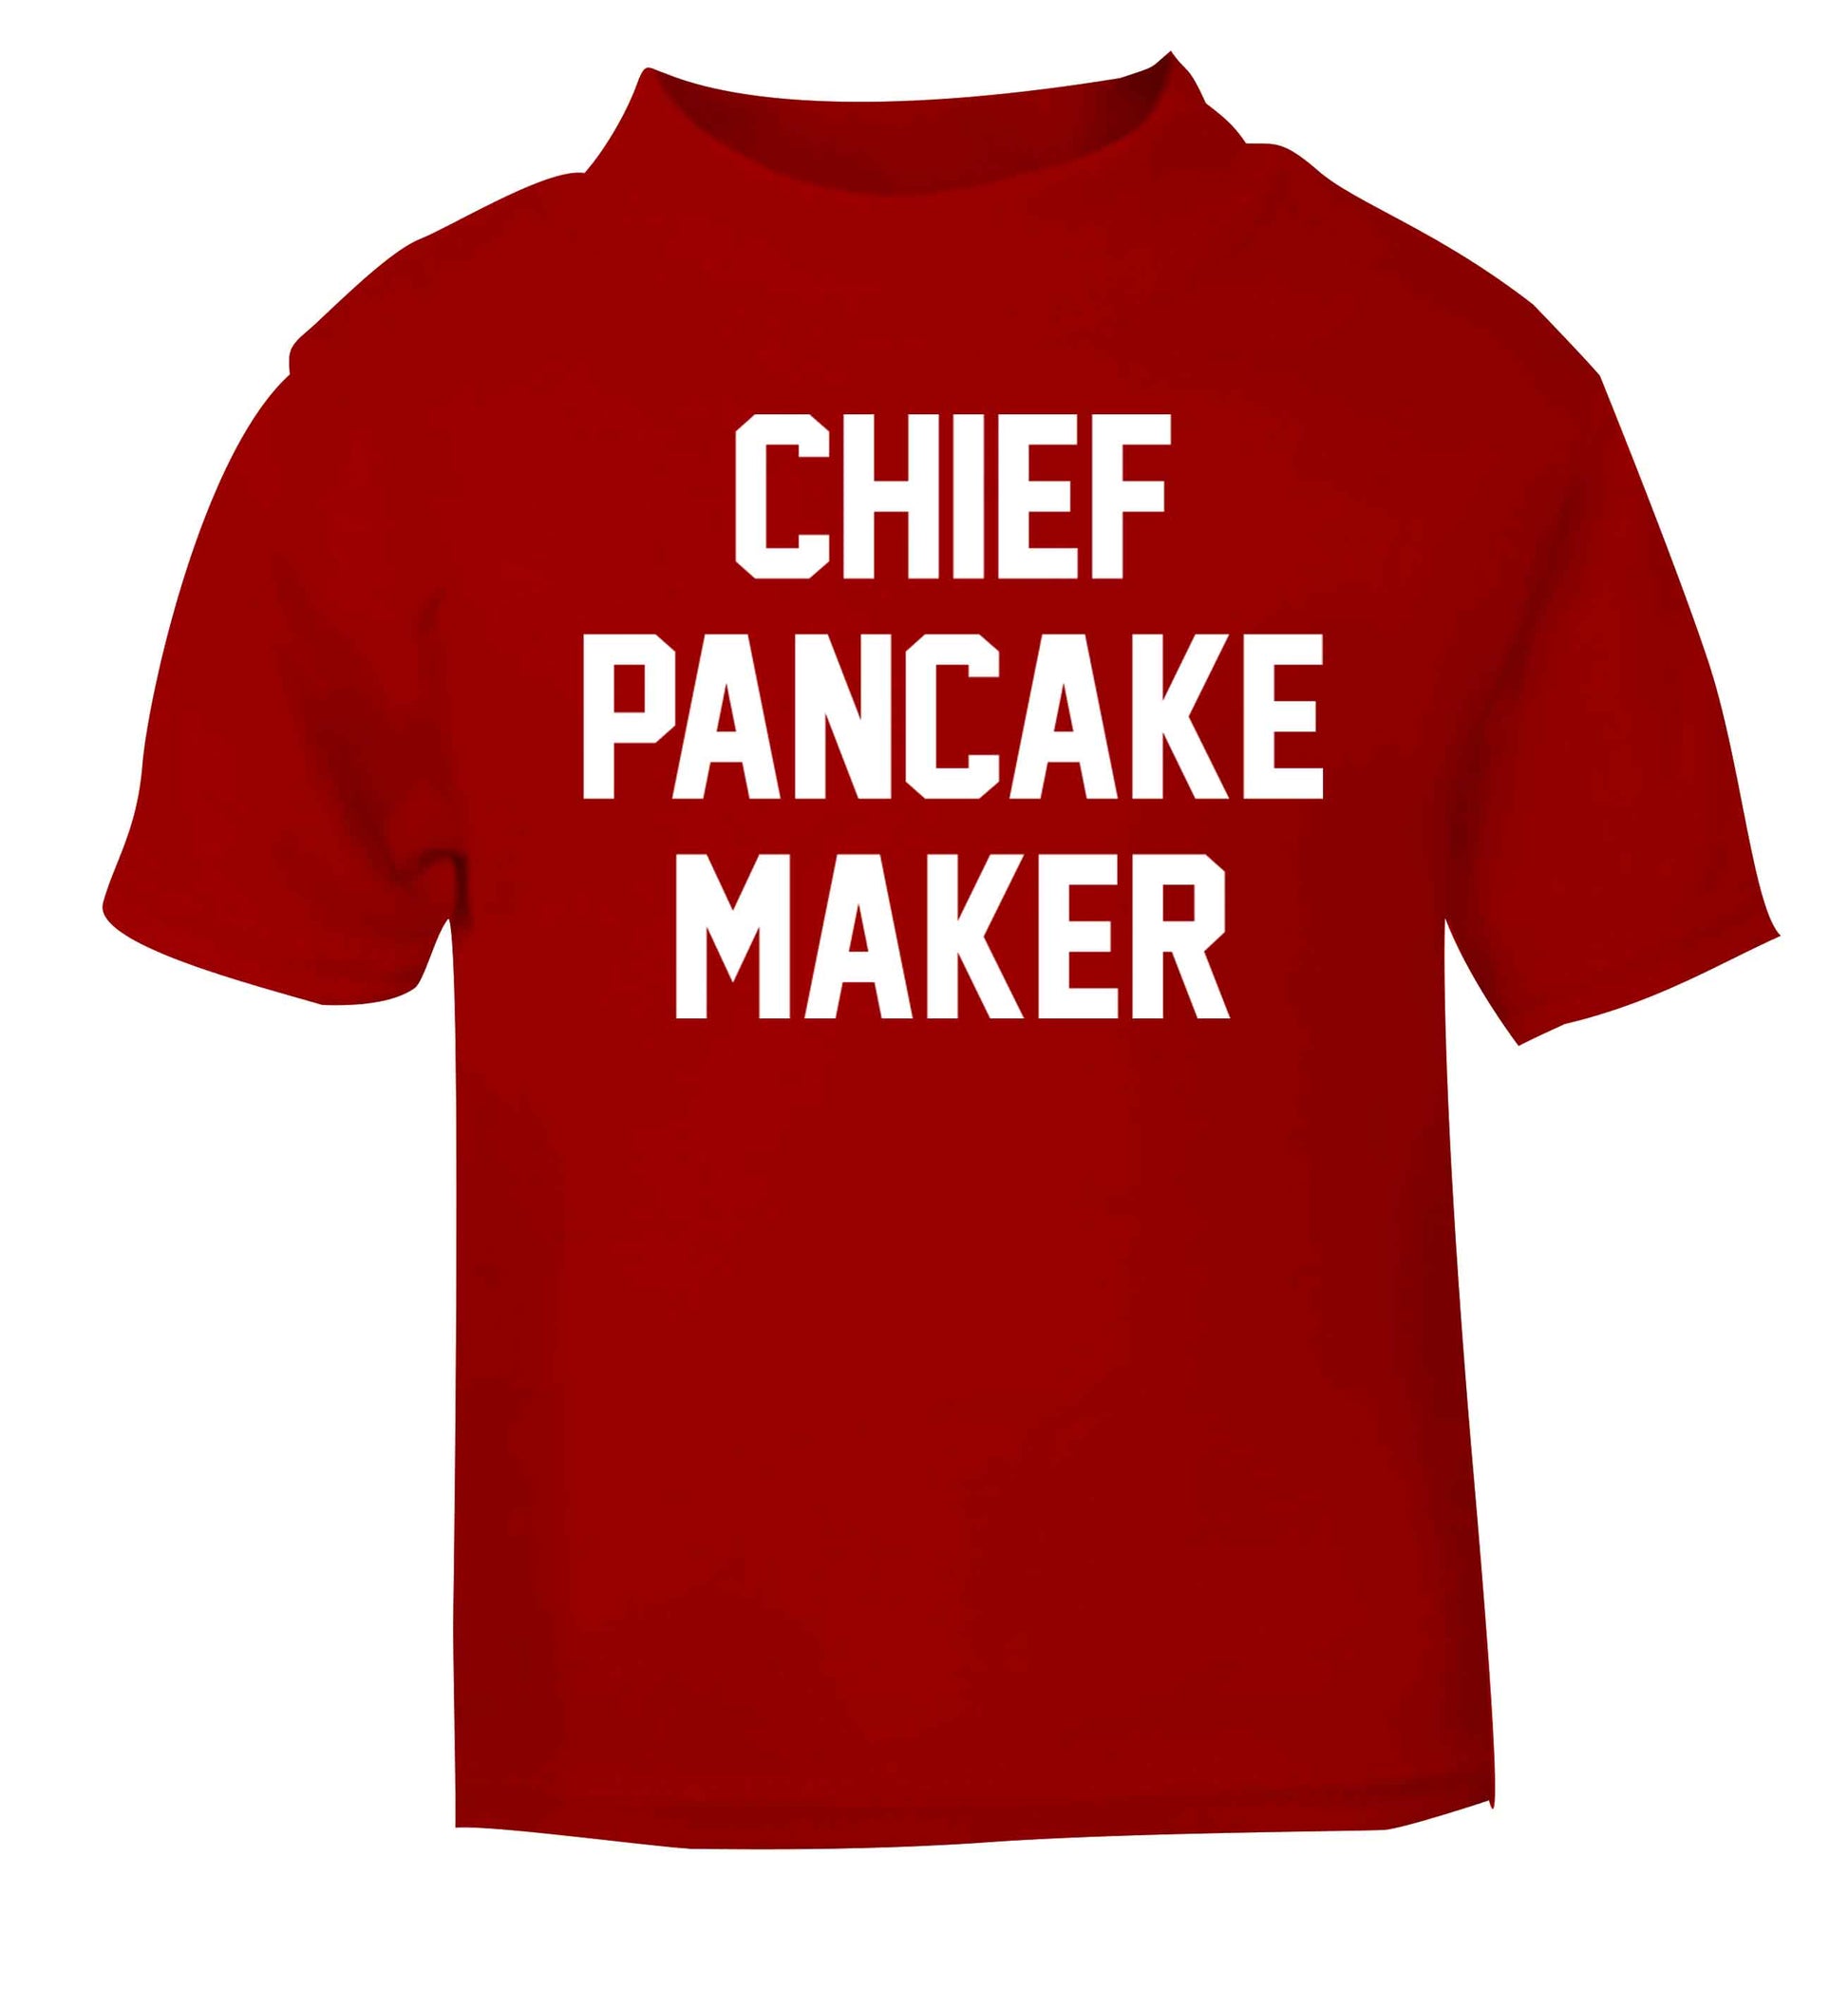 Chief pancake maker red baby toddler Tshirt 2 Years